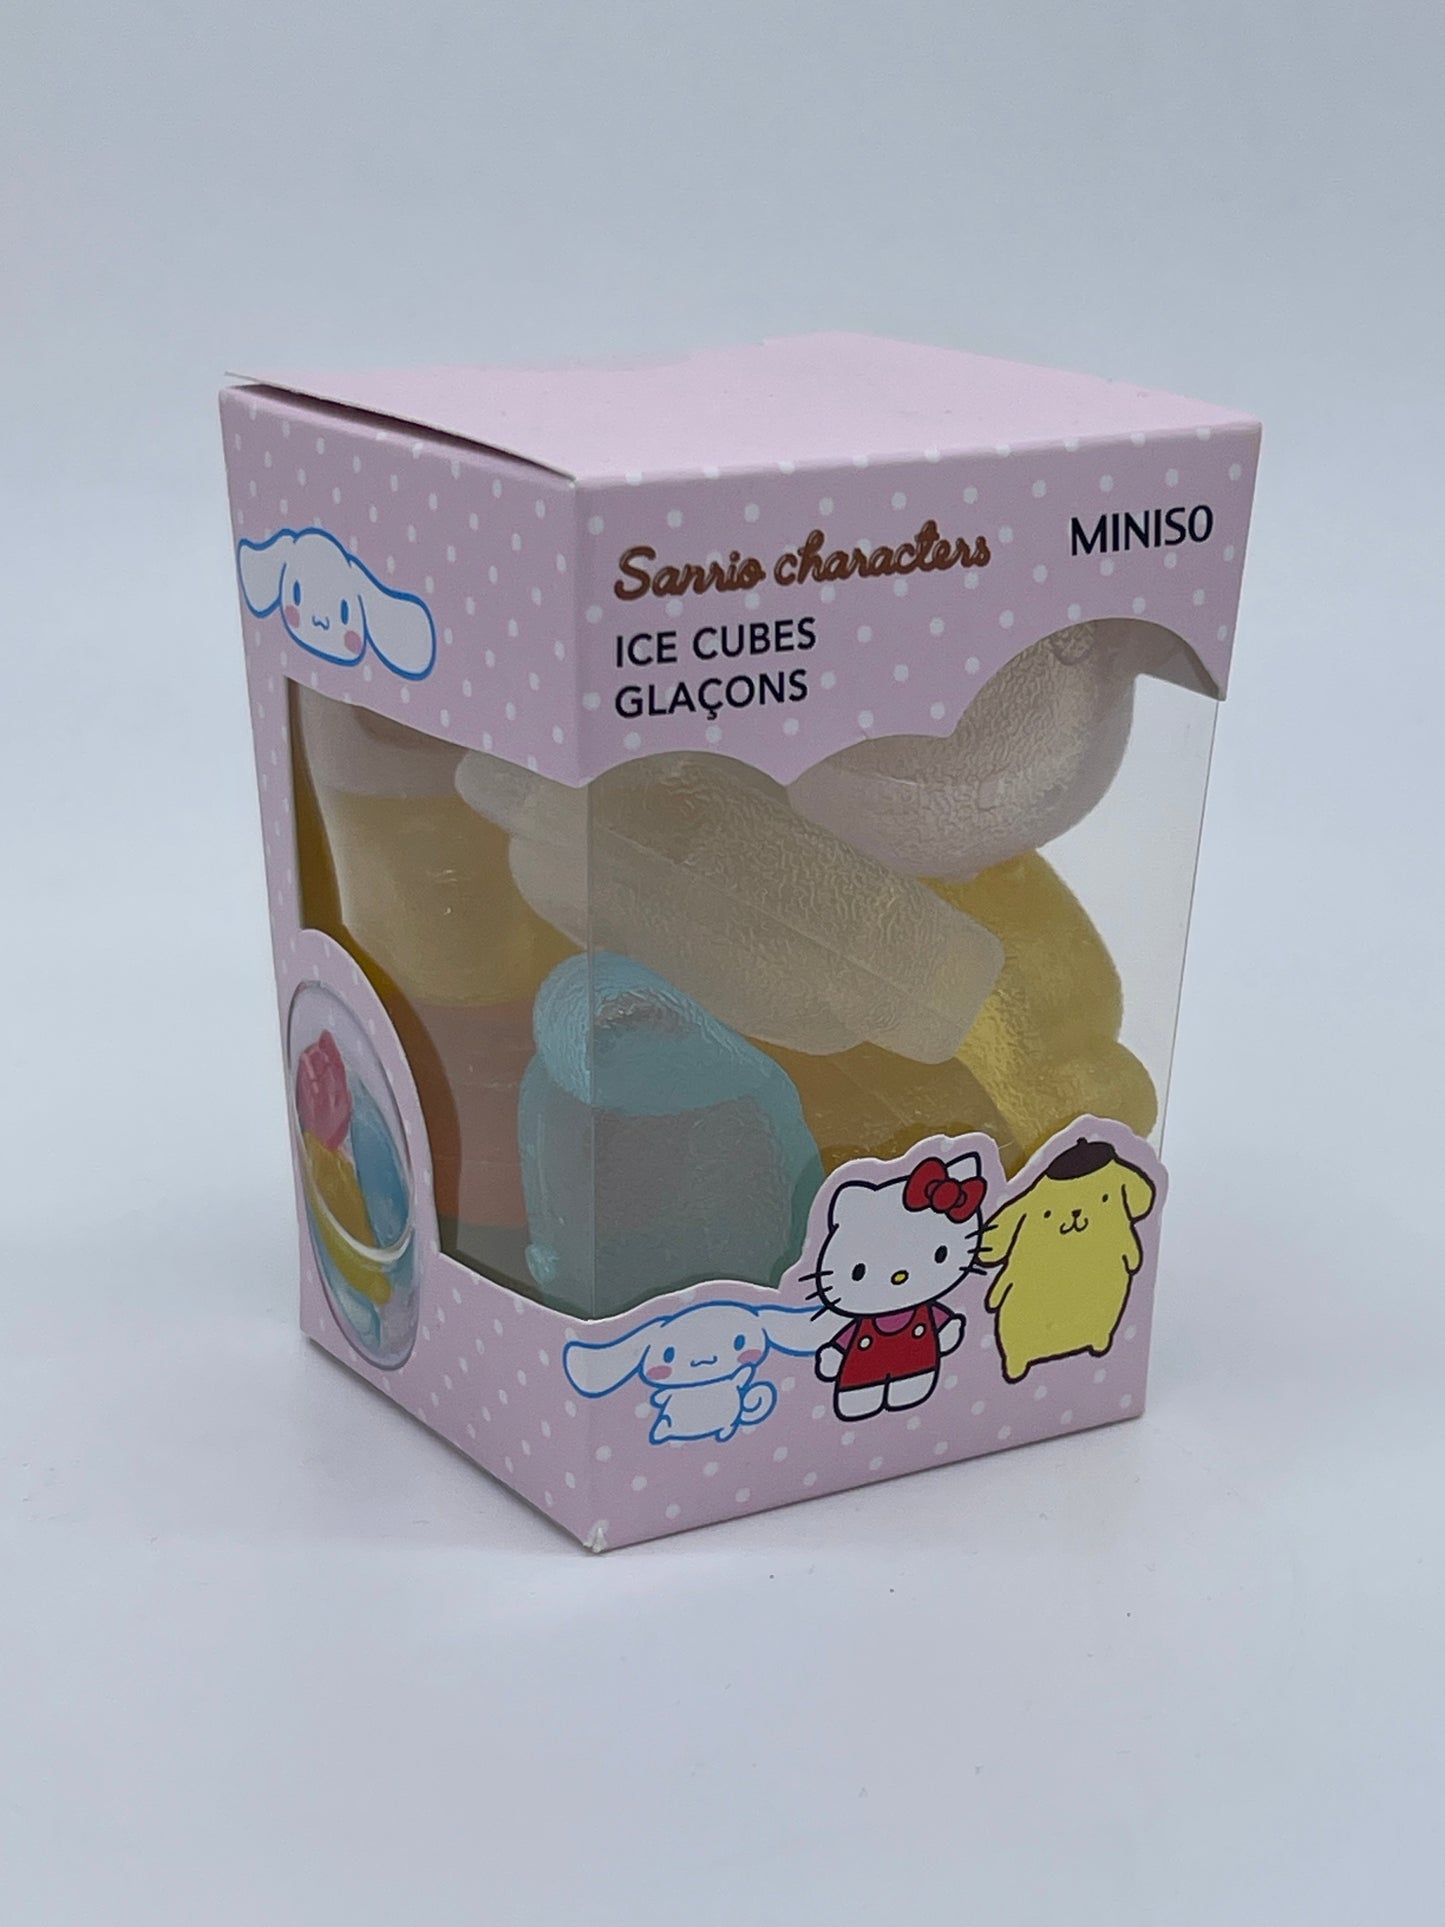 MINISO Japan "Eiswürfel, wiederverwendbar" Sanrio Characters Hello Kitty